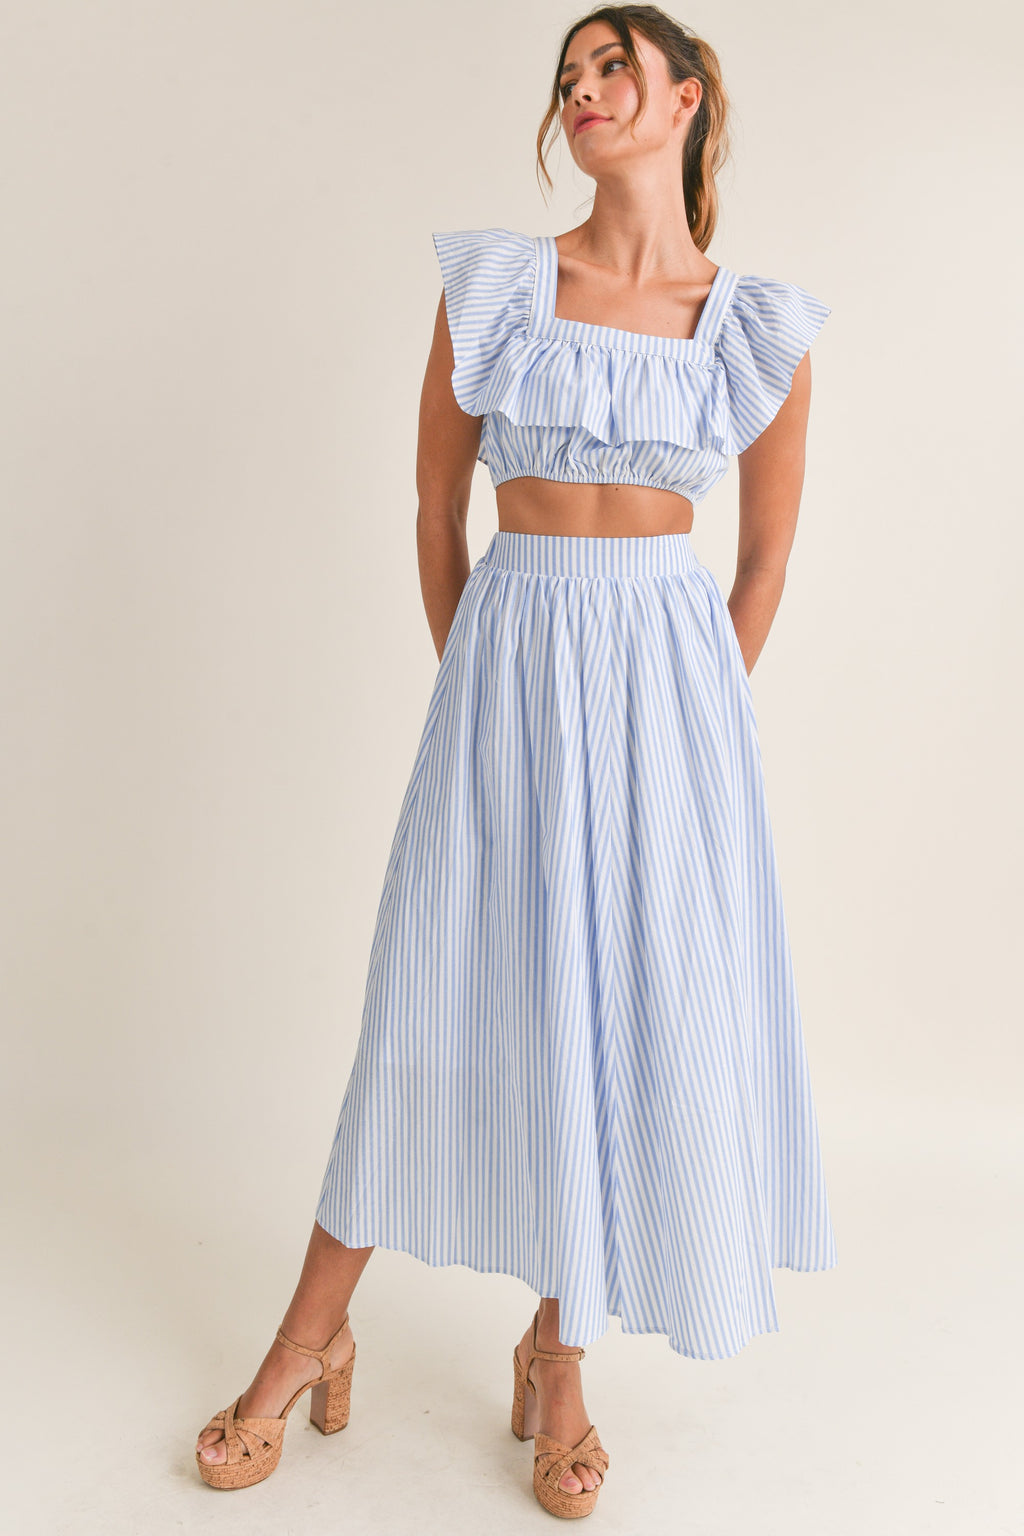 • Blue Striped Ruffle Crop Top and Midi Skirt Set